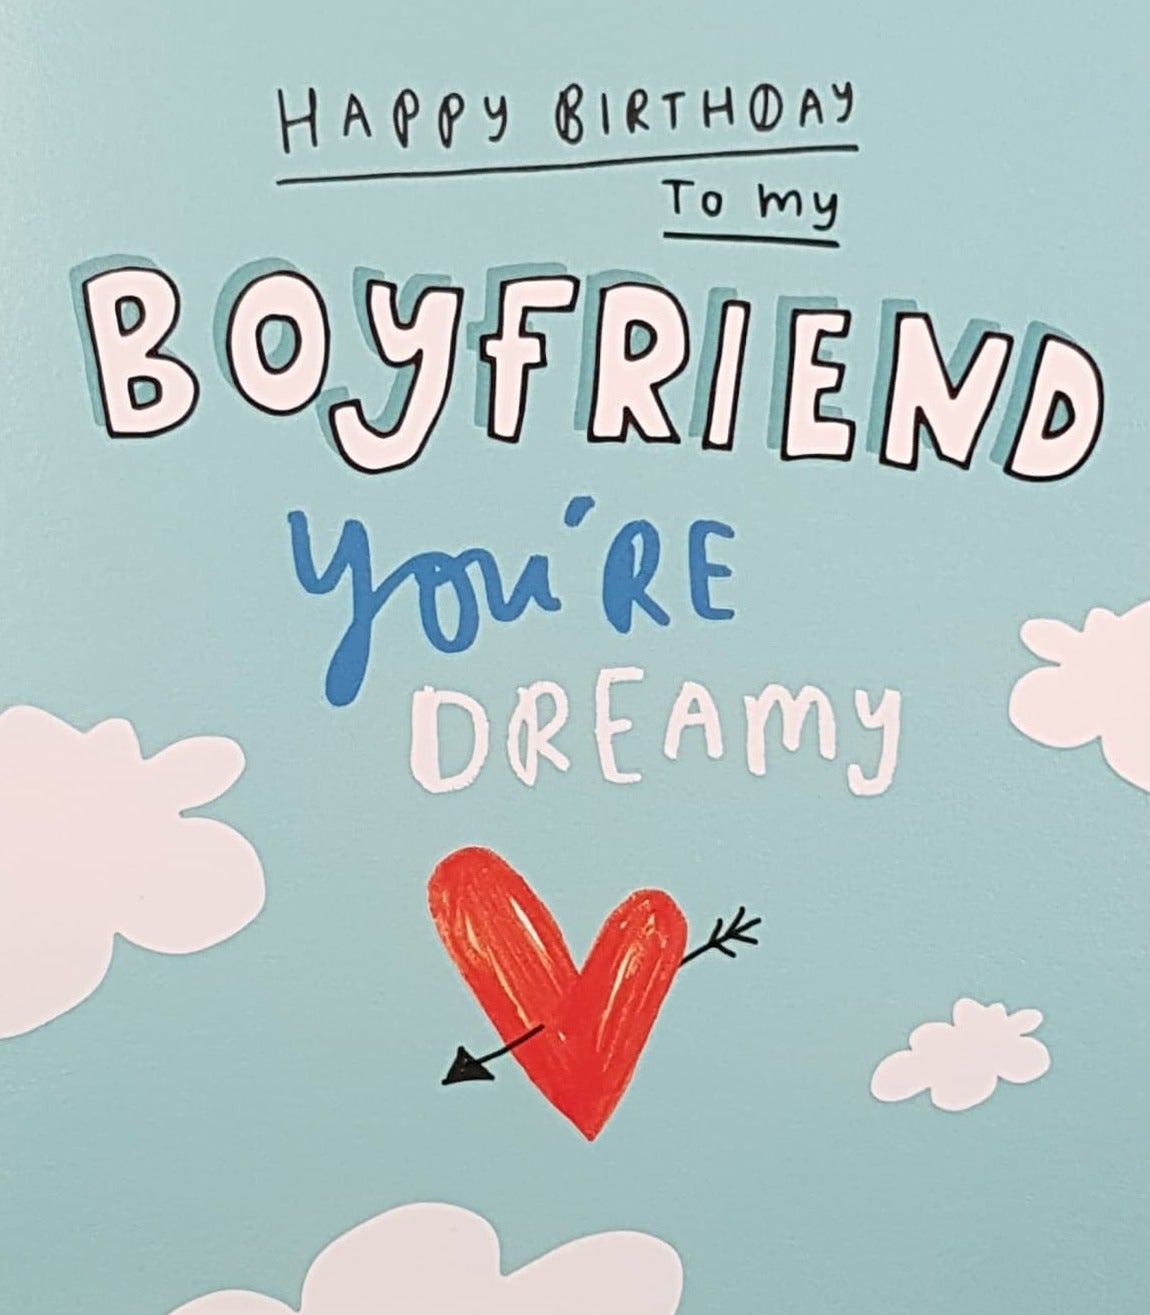 Birthday Card - Boyfriend / Arrow Through A Heart In Clouds